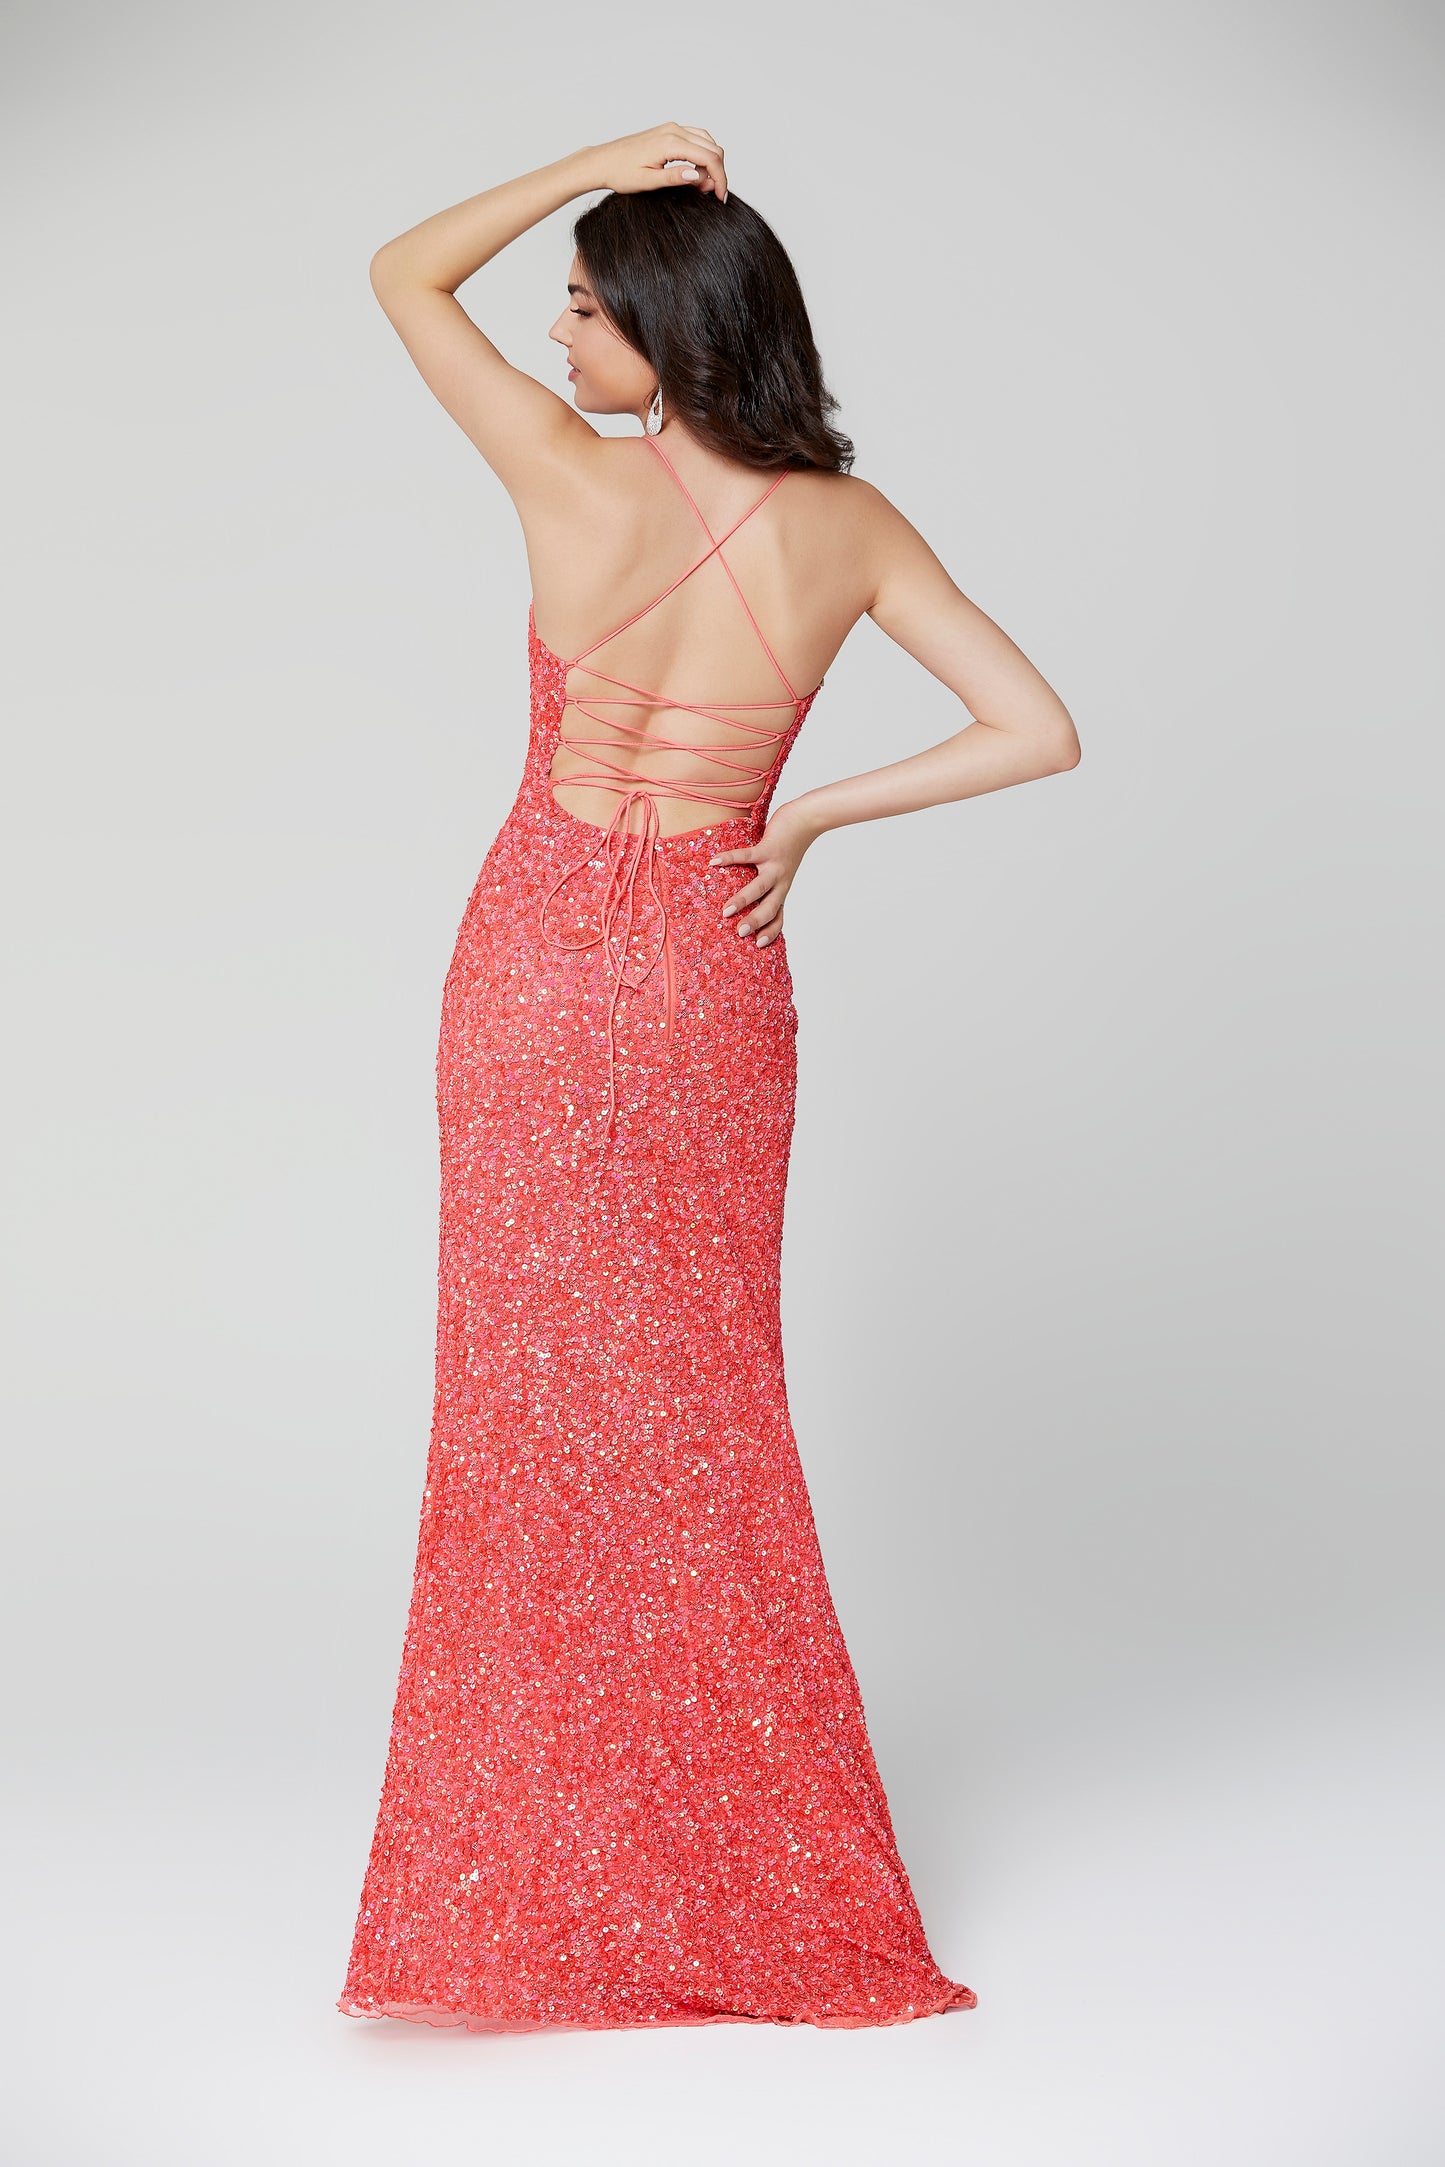 Primavera-Couture-3290-Coral-Prom-Dress-Back-View-Sequins-Tie-Back-Scoop-Neckline